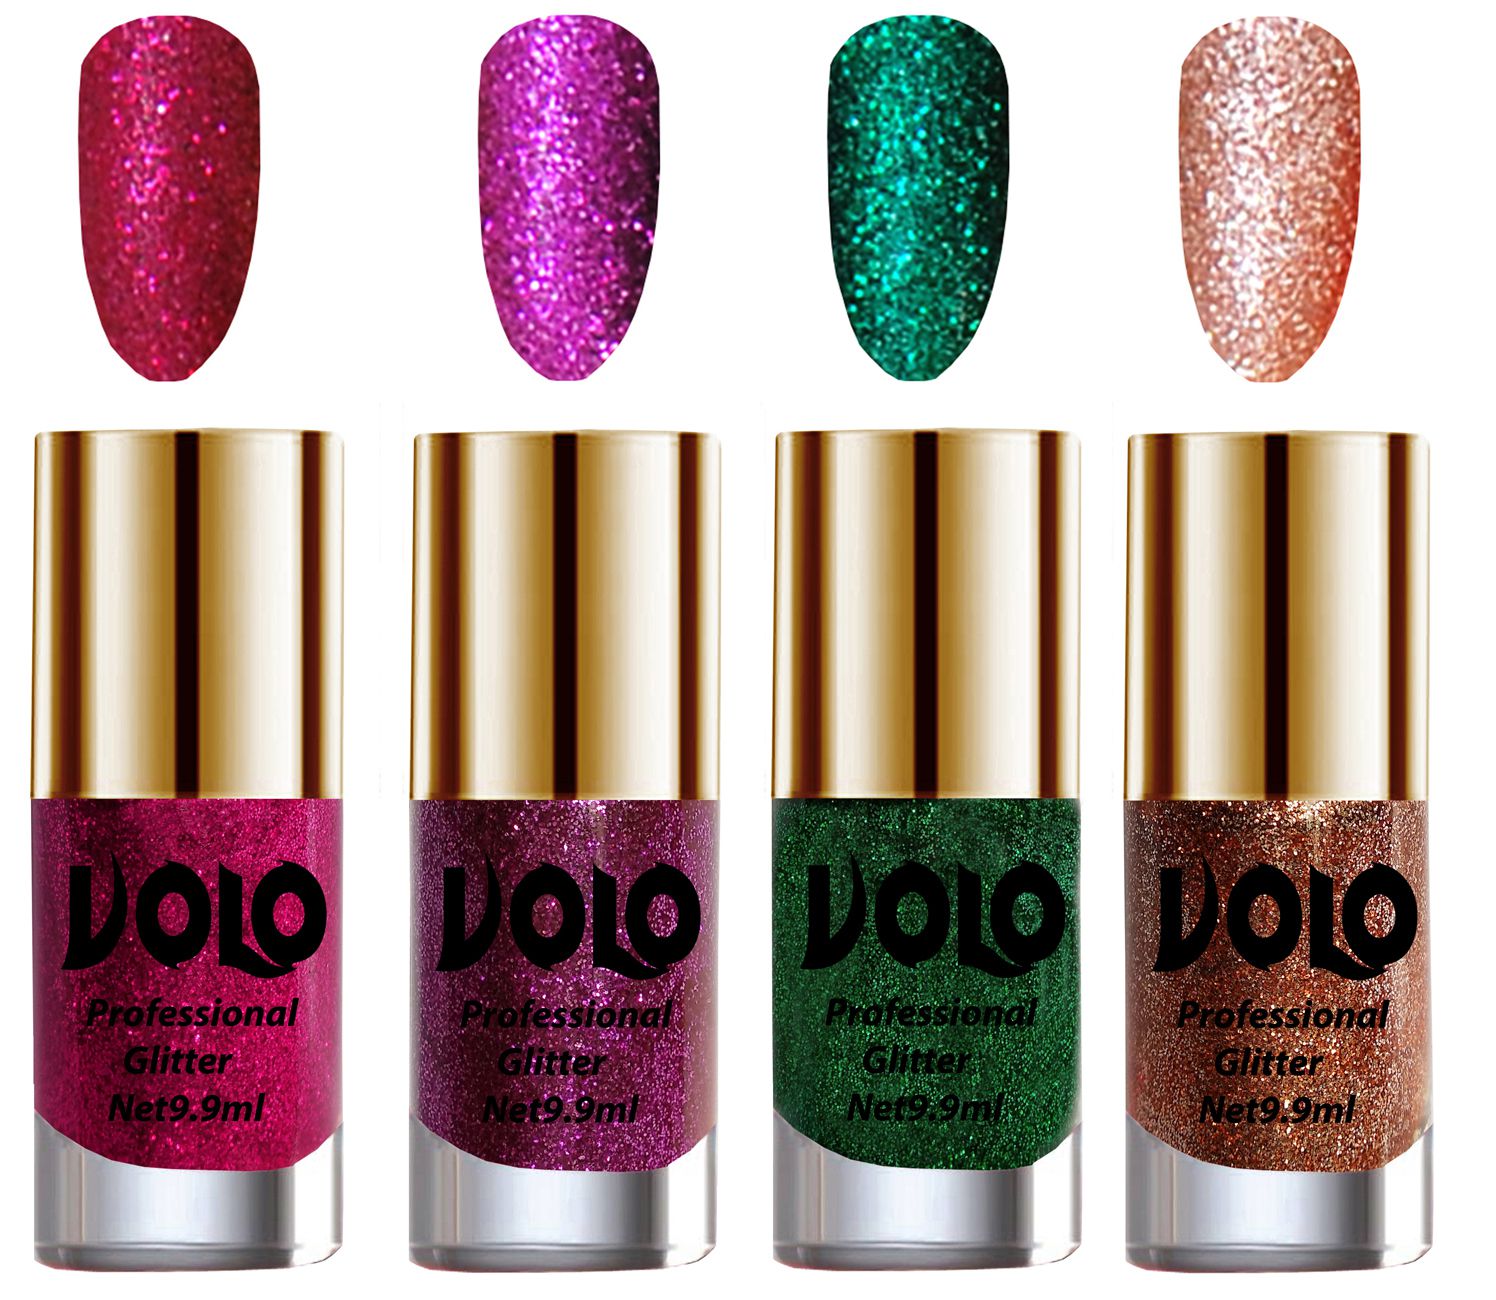     			VOLO Professionally Used Glitter Shine Nail Polish Magenta,Purple,Green Pink Pack of 4 39 mL